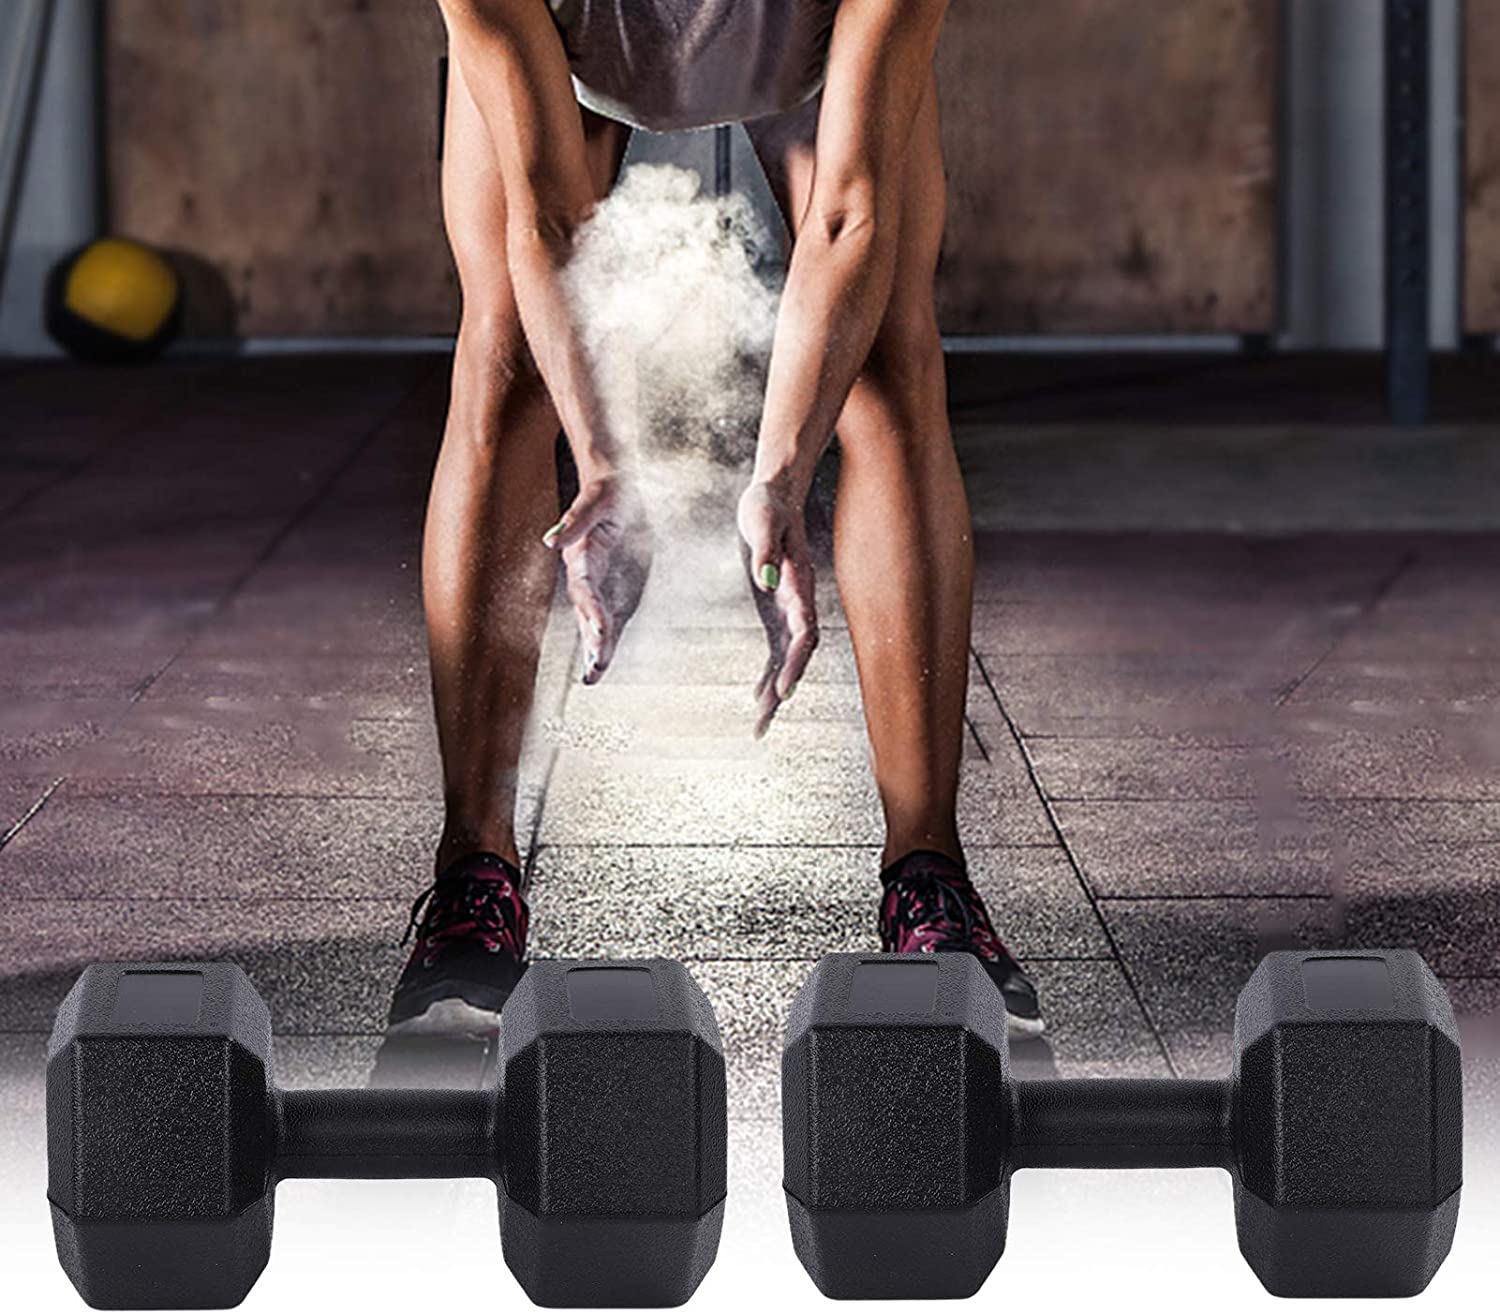 2x7.5kg Pair of Hexagonal Rubber Dumbbell Set Weight Fitness Gym Workout UK